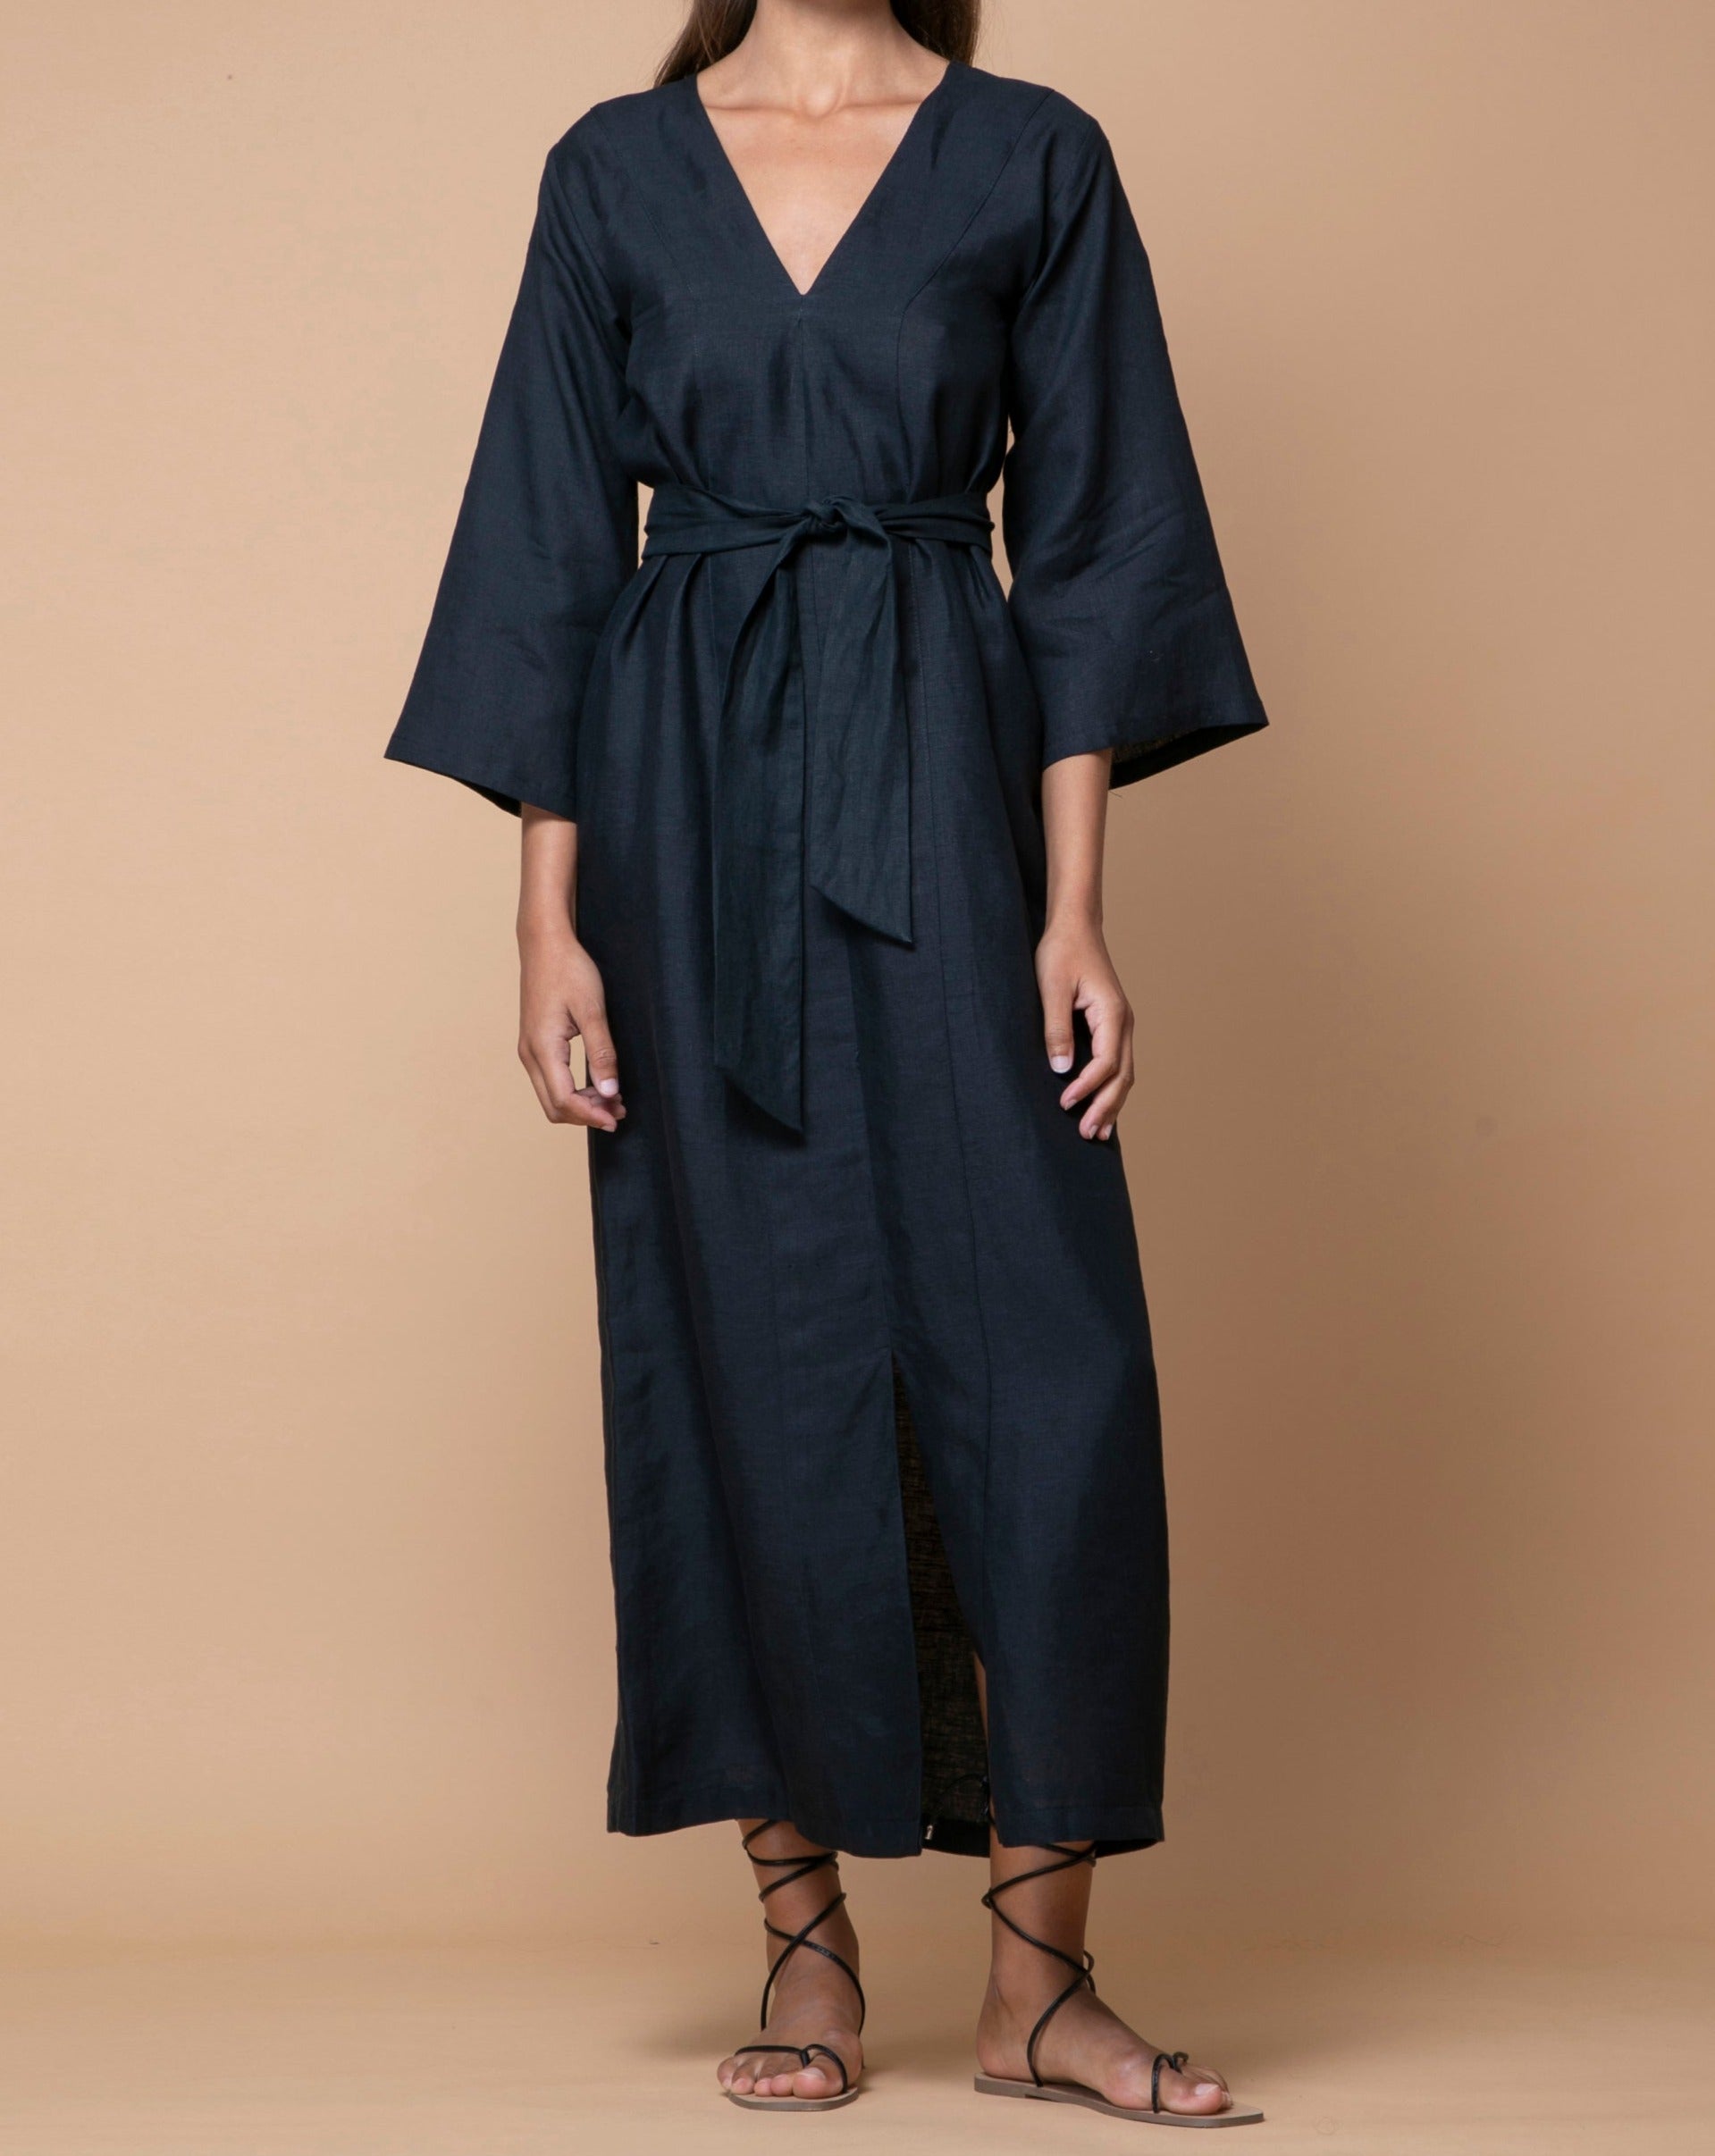 Black Australian Handmade Premium Linen Longsleeve V-Neck Dress Boutique Designer Summer Casual Cocktail